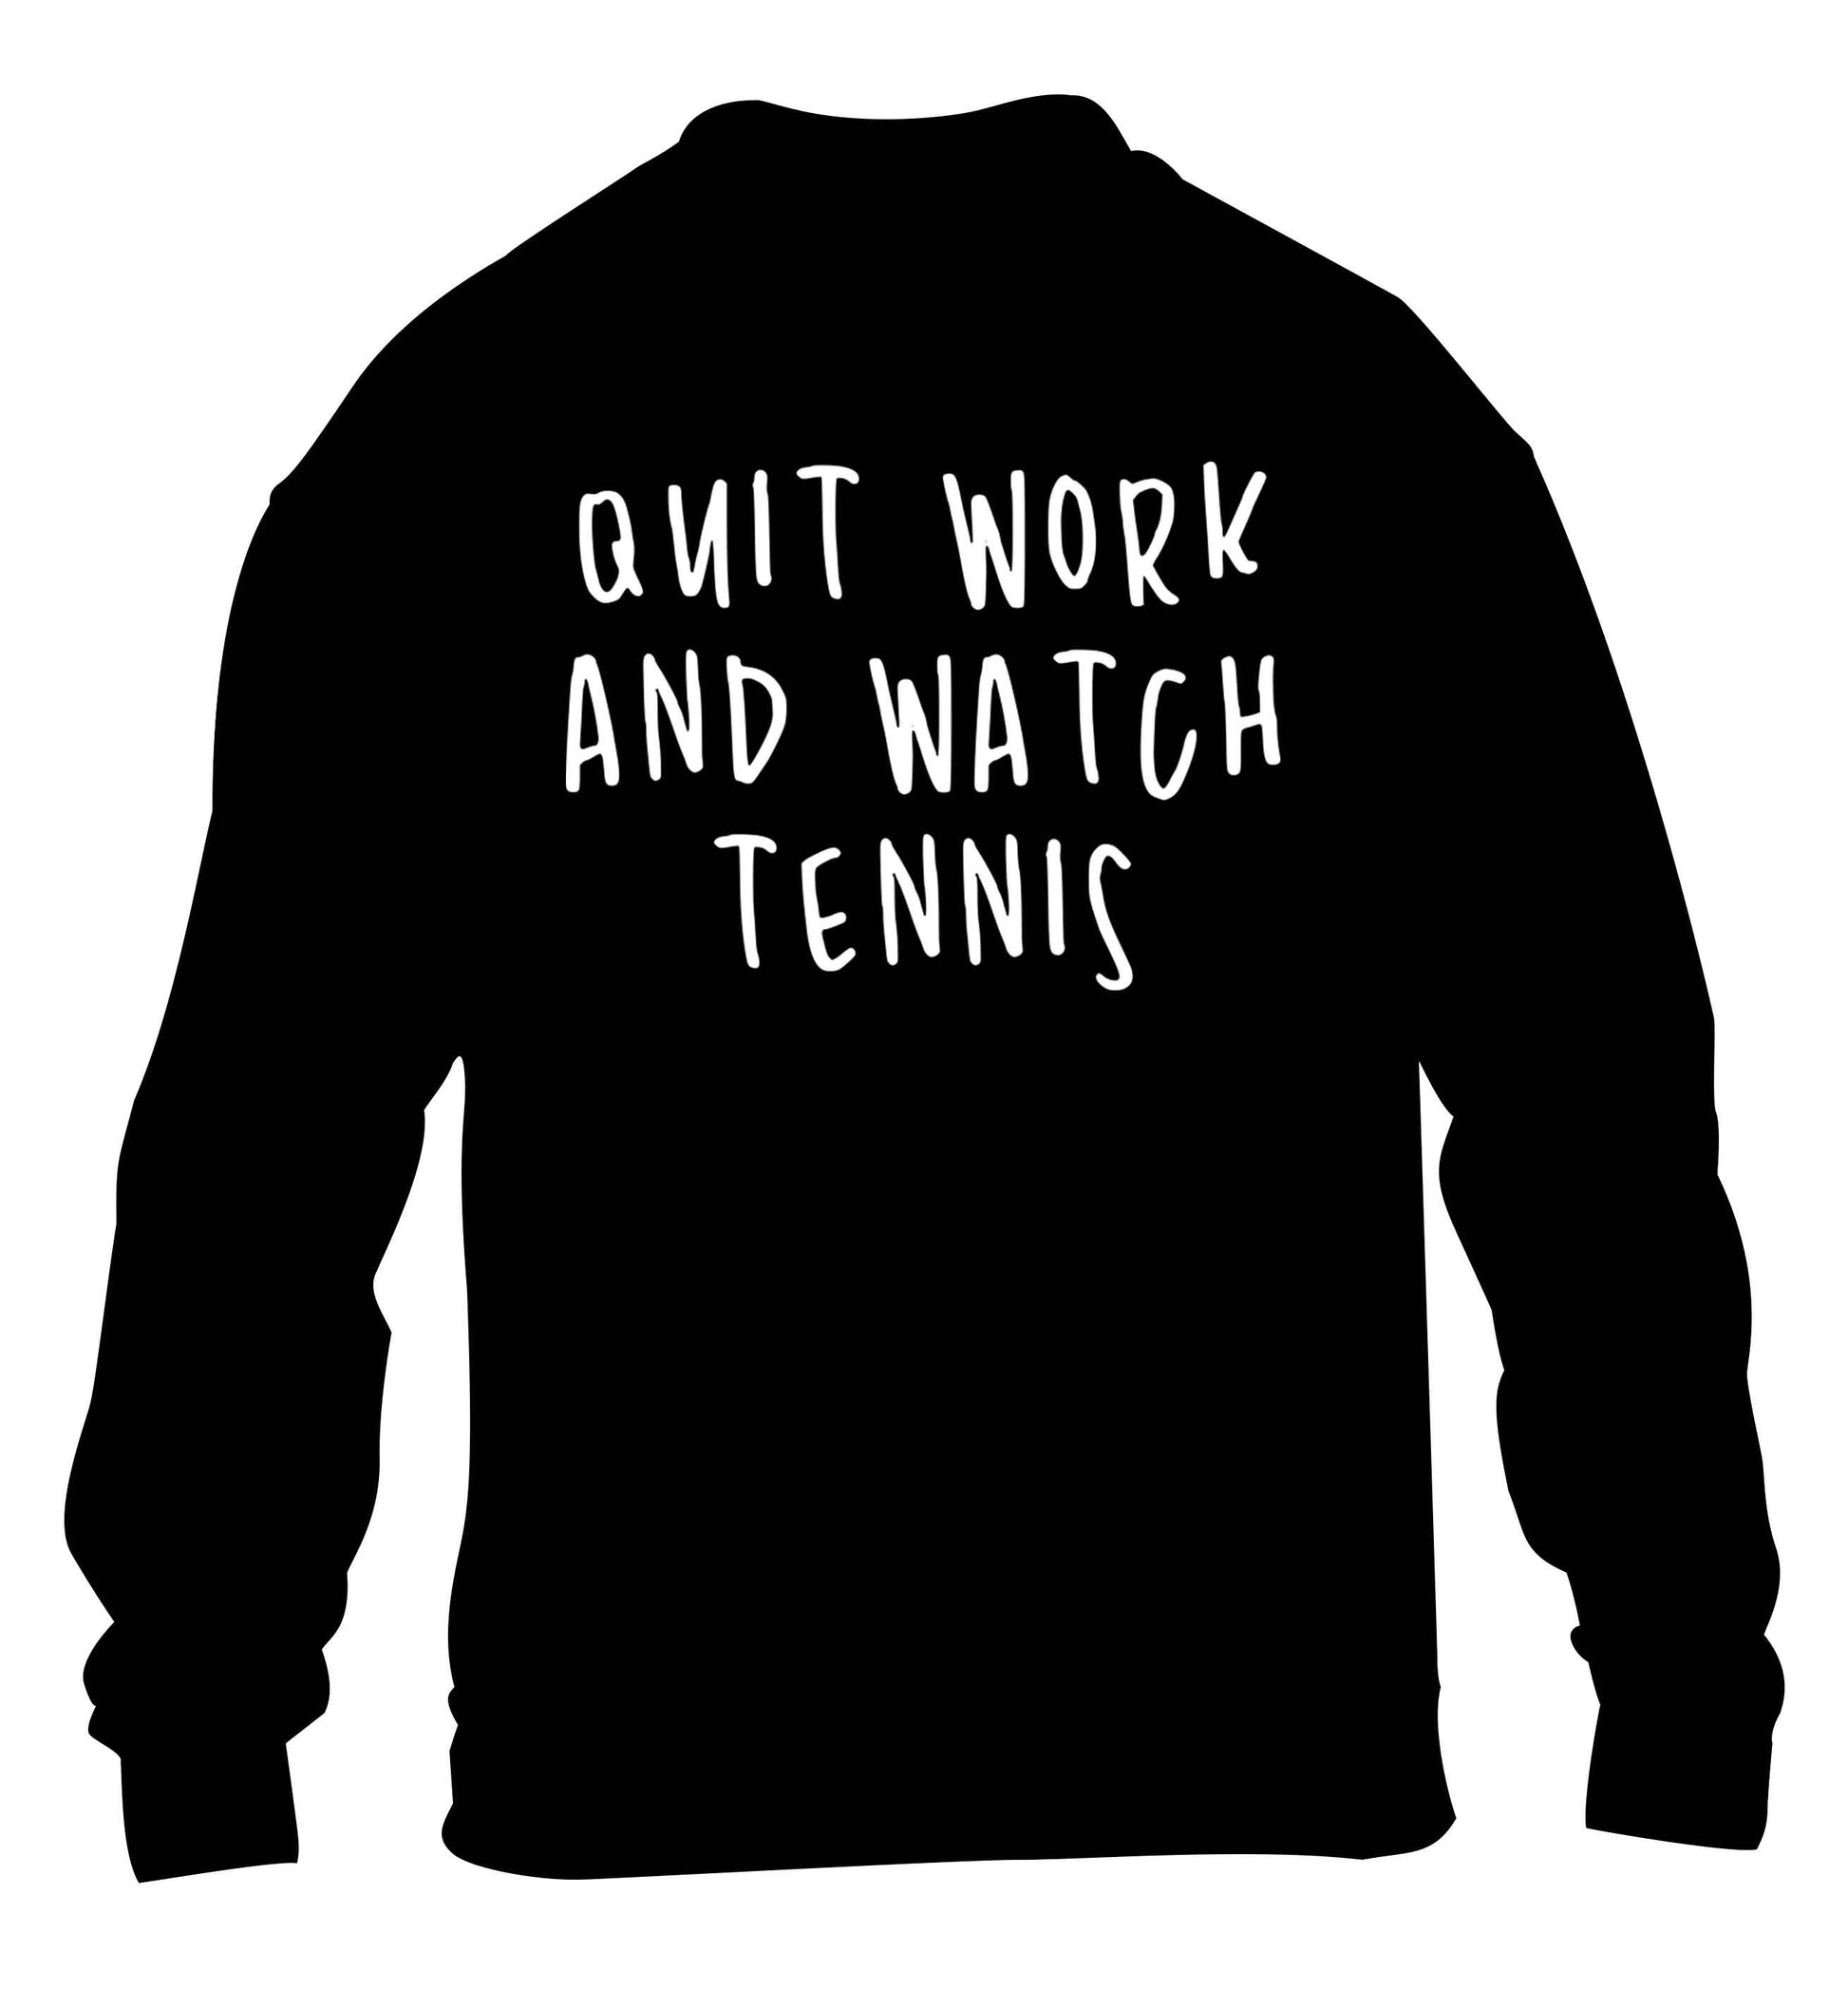 Quit work and watch tennis children's black sweater 12-13 Years